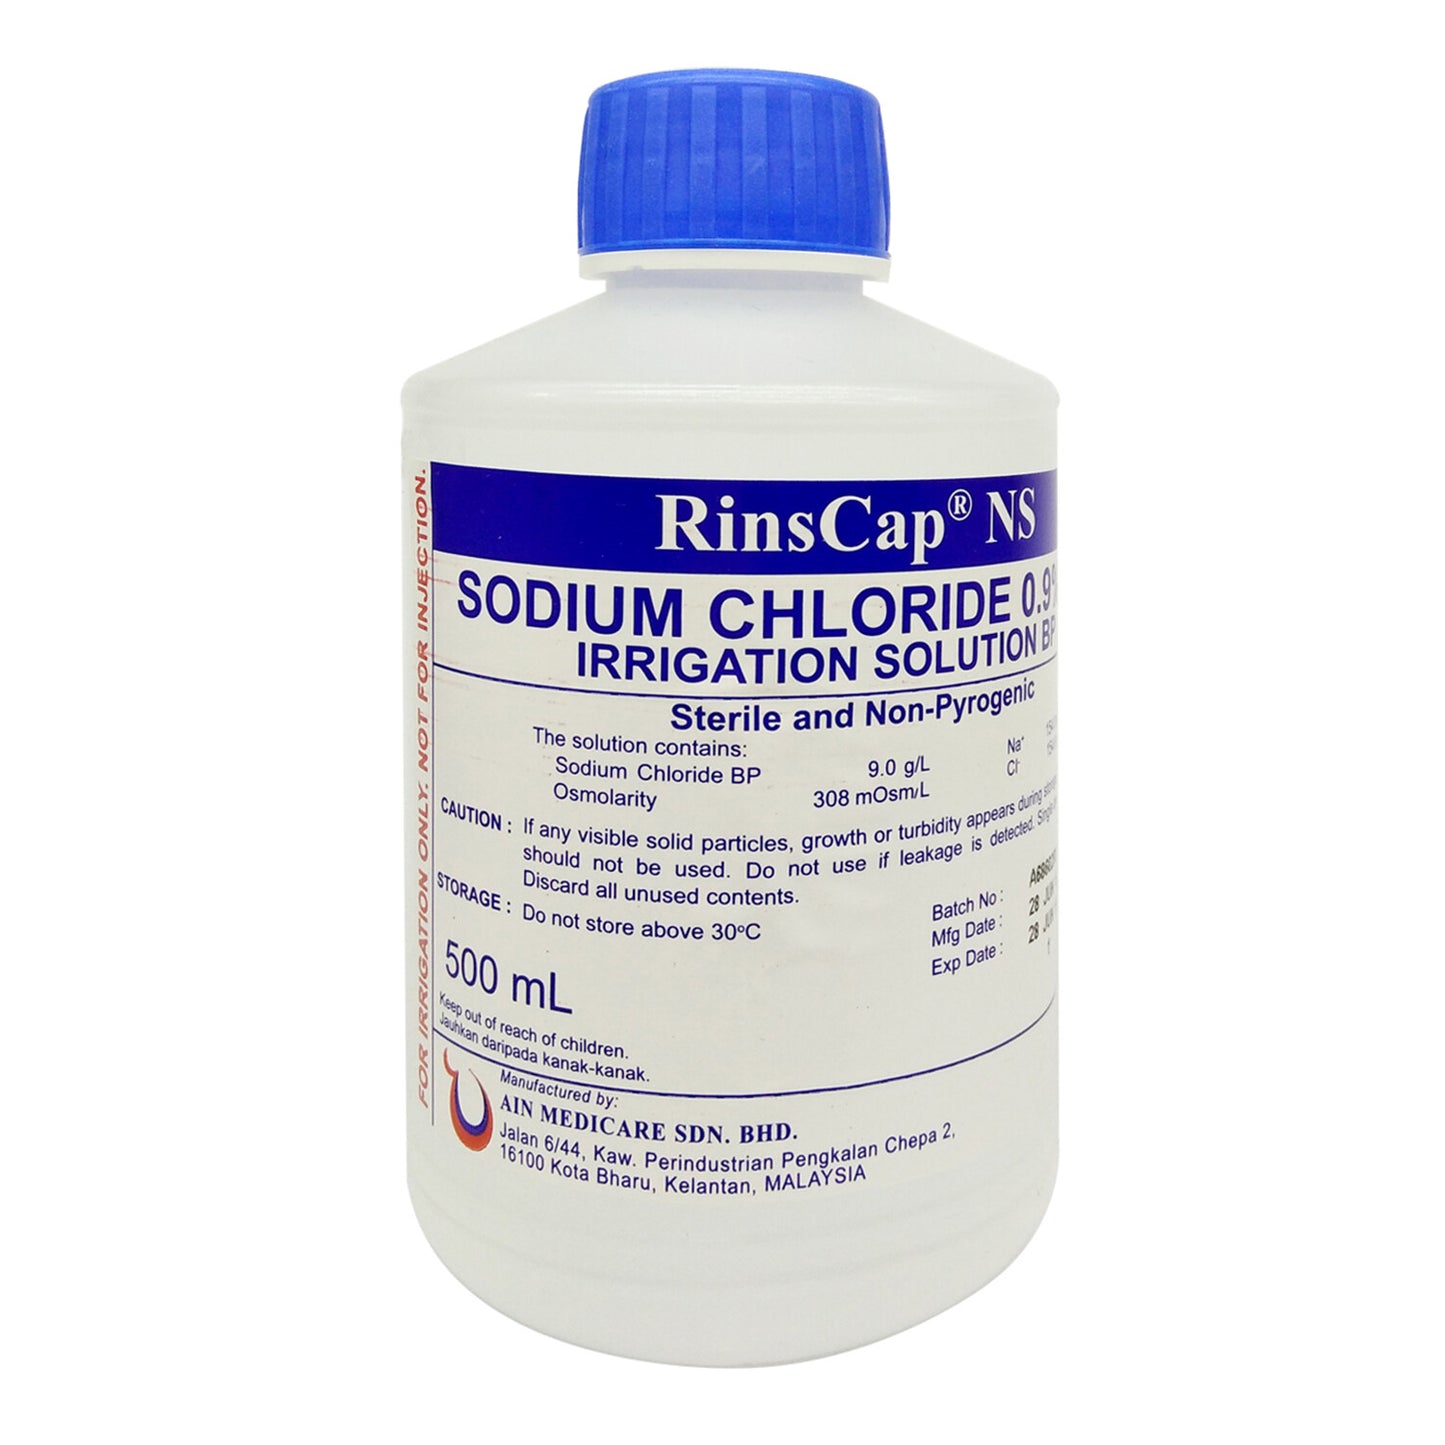 Rinscap NS Normal Saline Sodium Chloride 0.9% Irrigation Solution 500mL